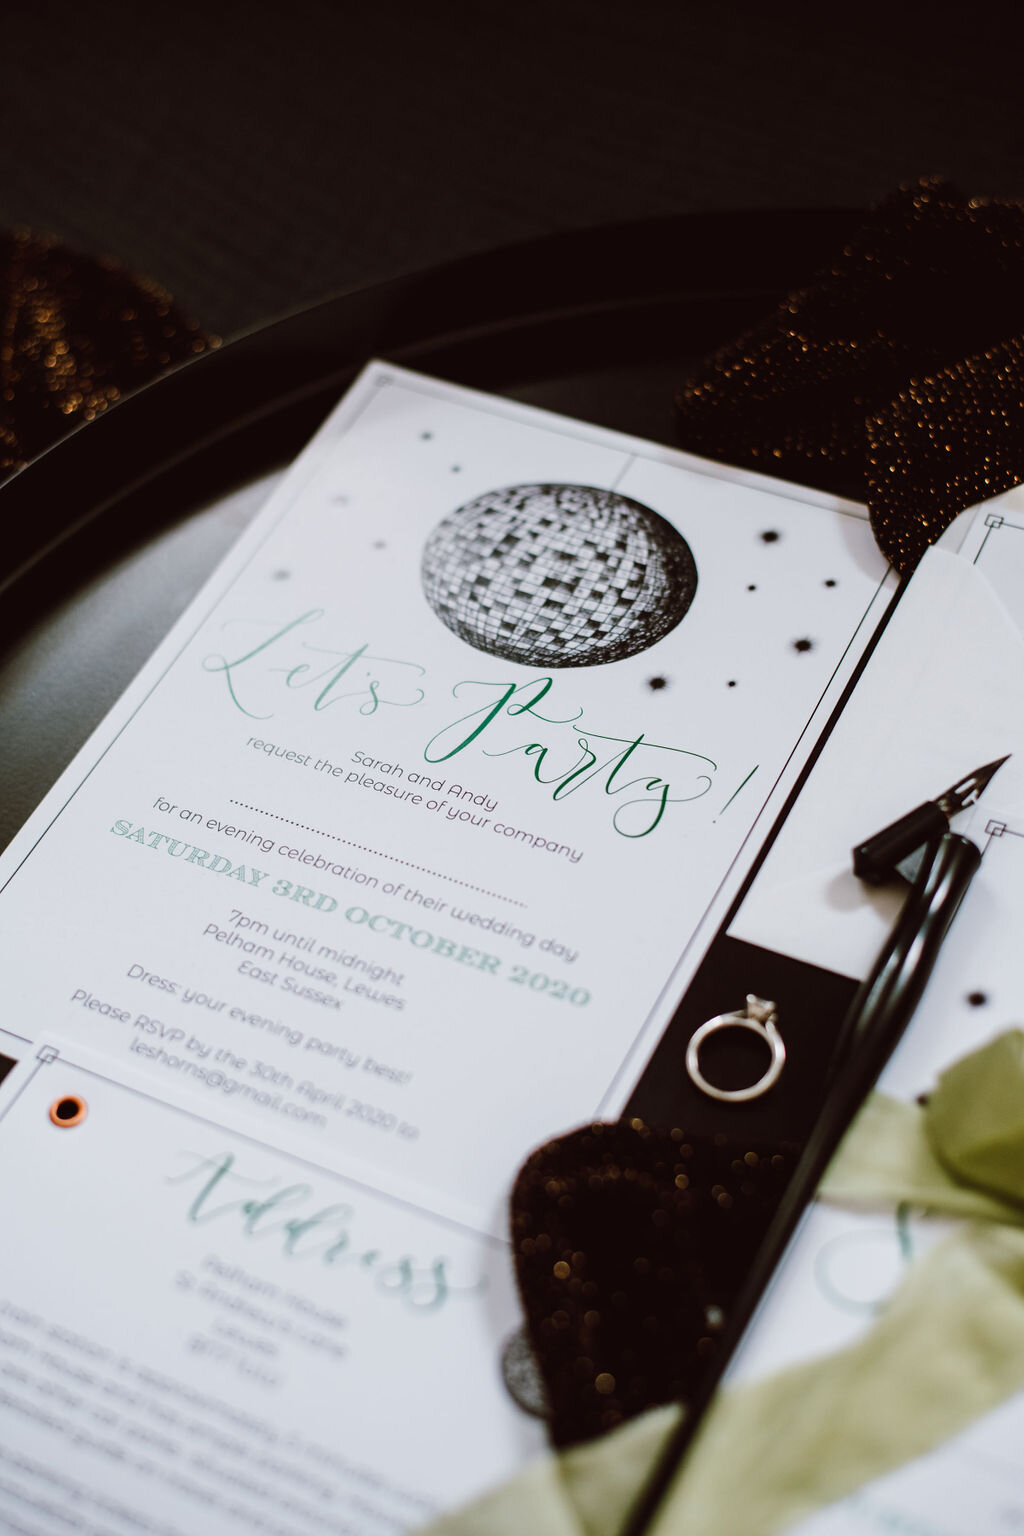 Disco ball invites - Evening invitations eco friendly invitations made from recycled paper - Pelham House wedding stationery.jpg